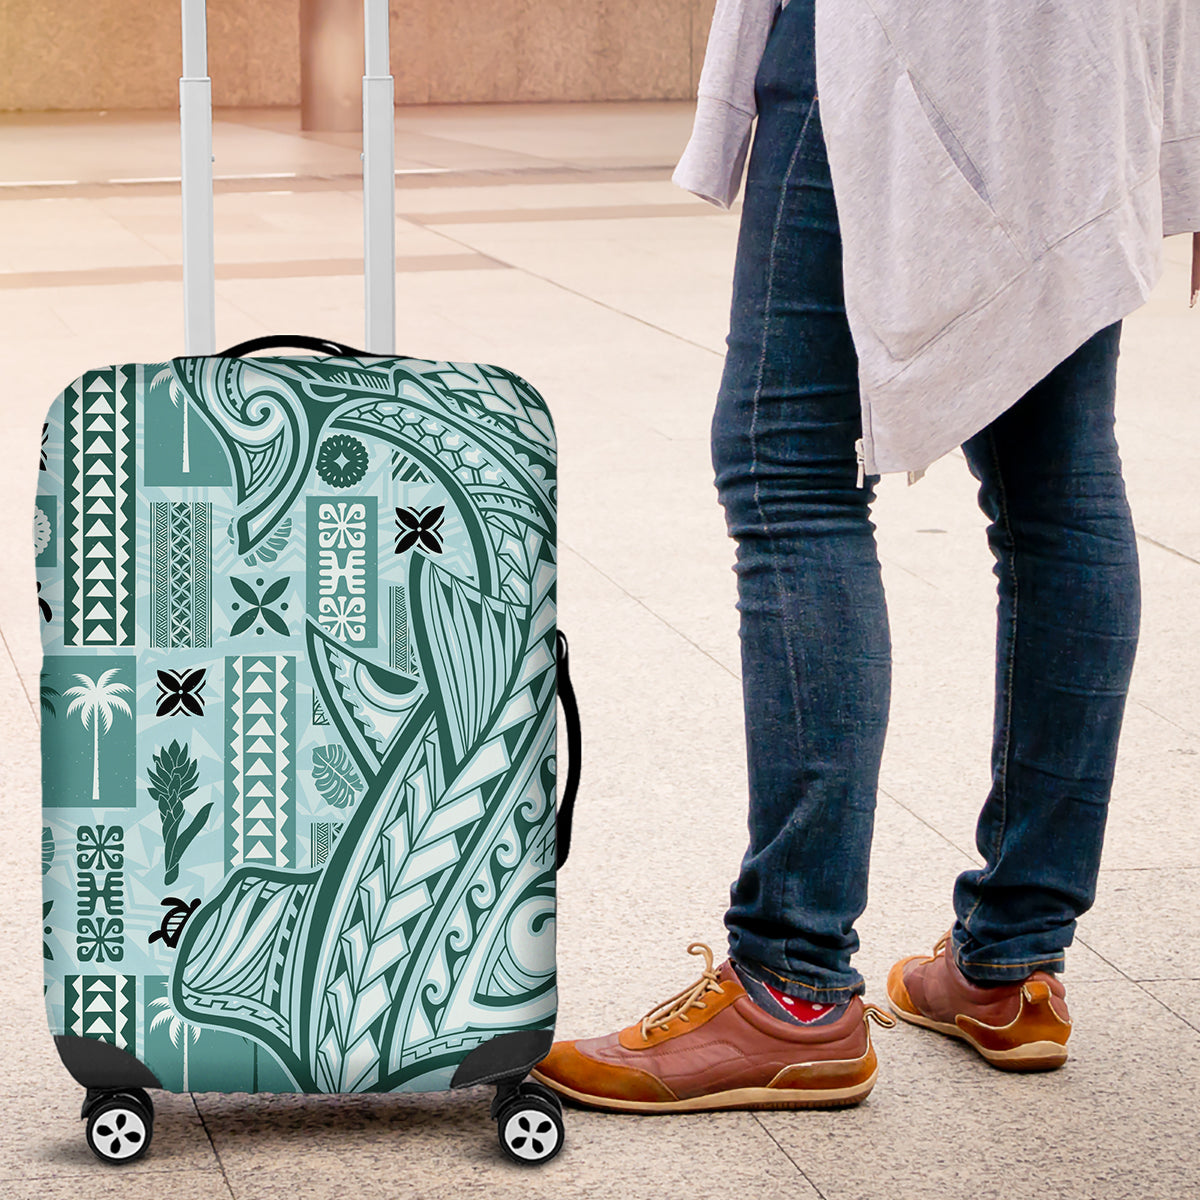 Samoa Tapa Luggage Cover Siapo Mix Tatau Patterns - Teal LT7 Teal - Polynesian Pride